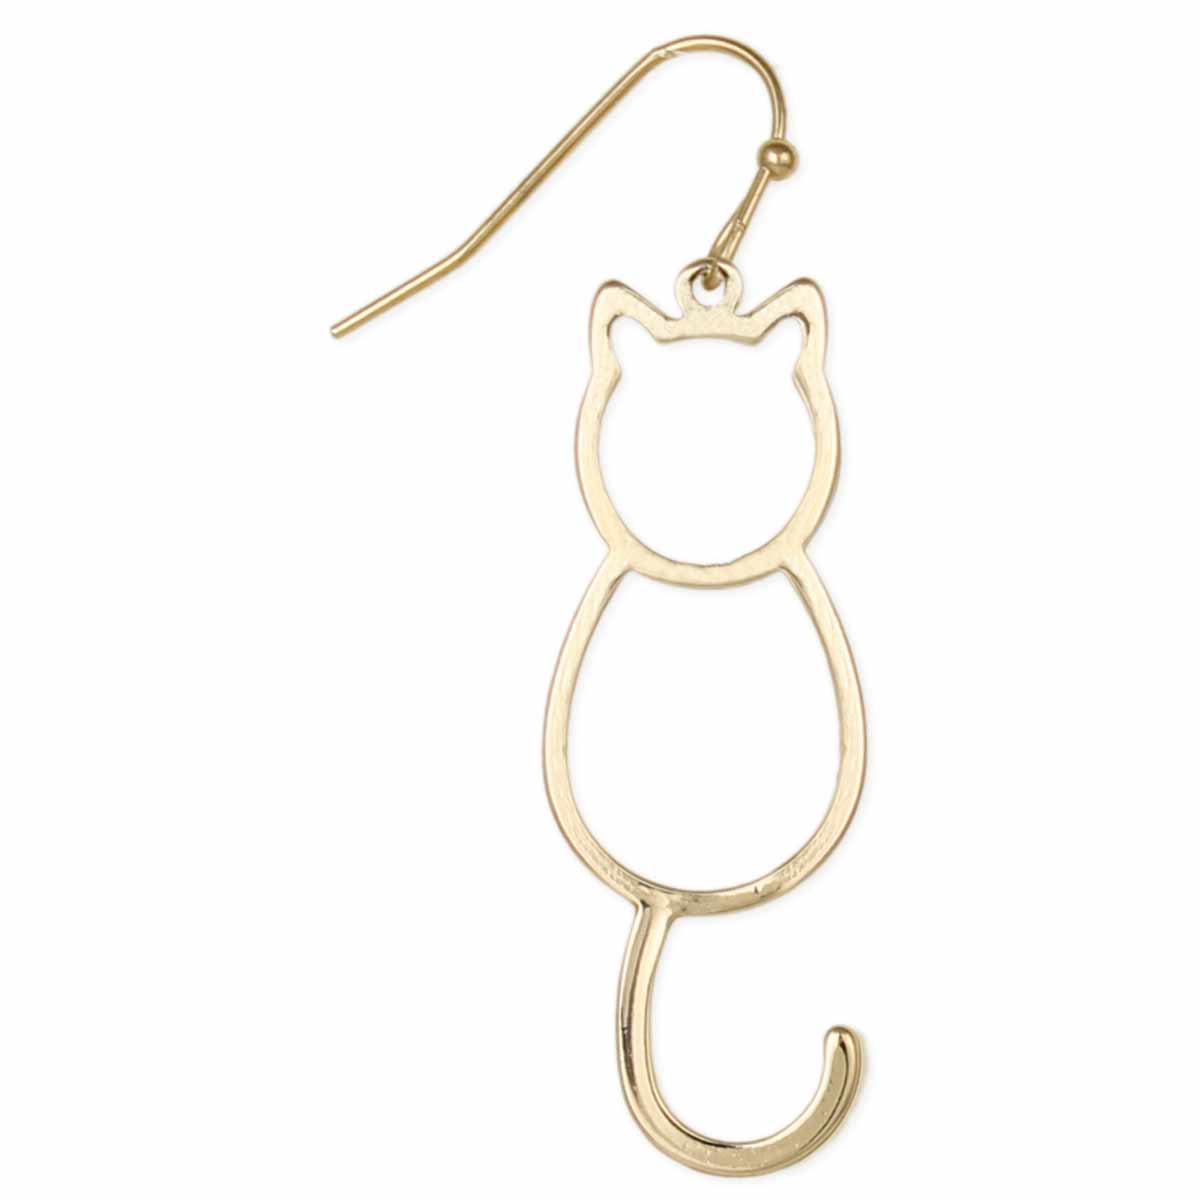 Sitting Kitty Gold Cutout Cat Earrings - Spiral Circle